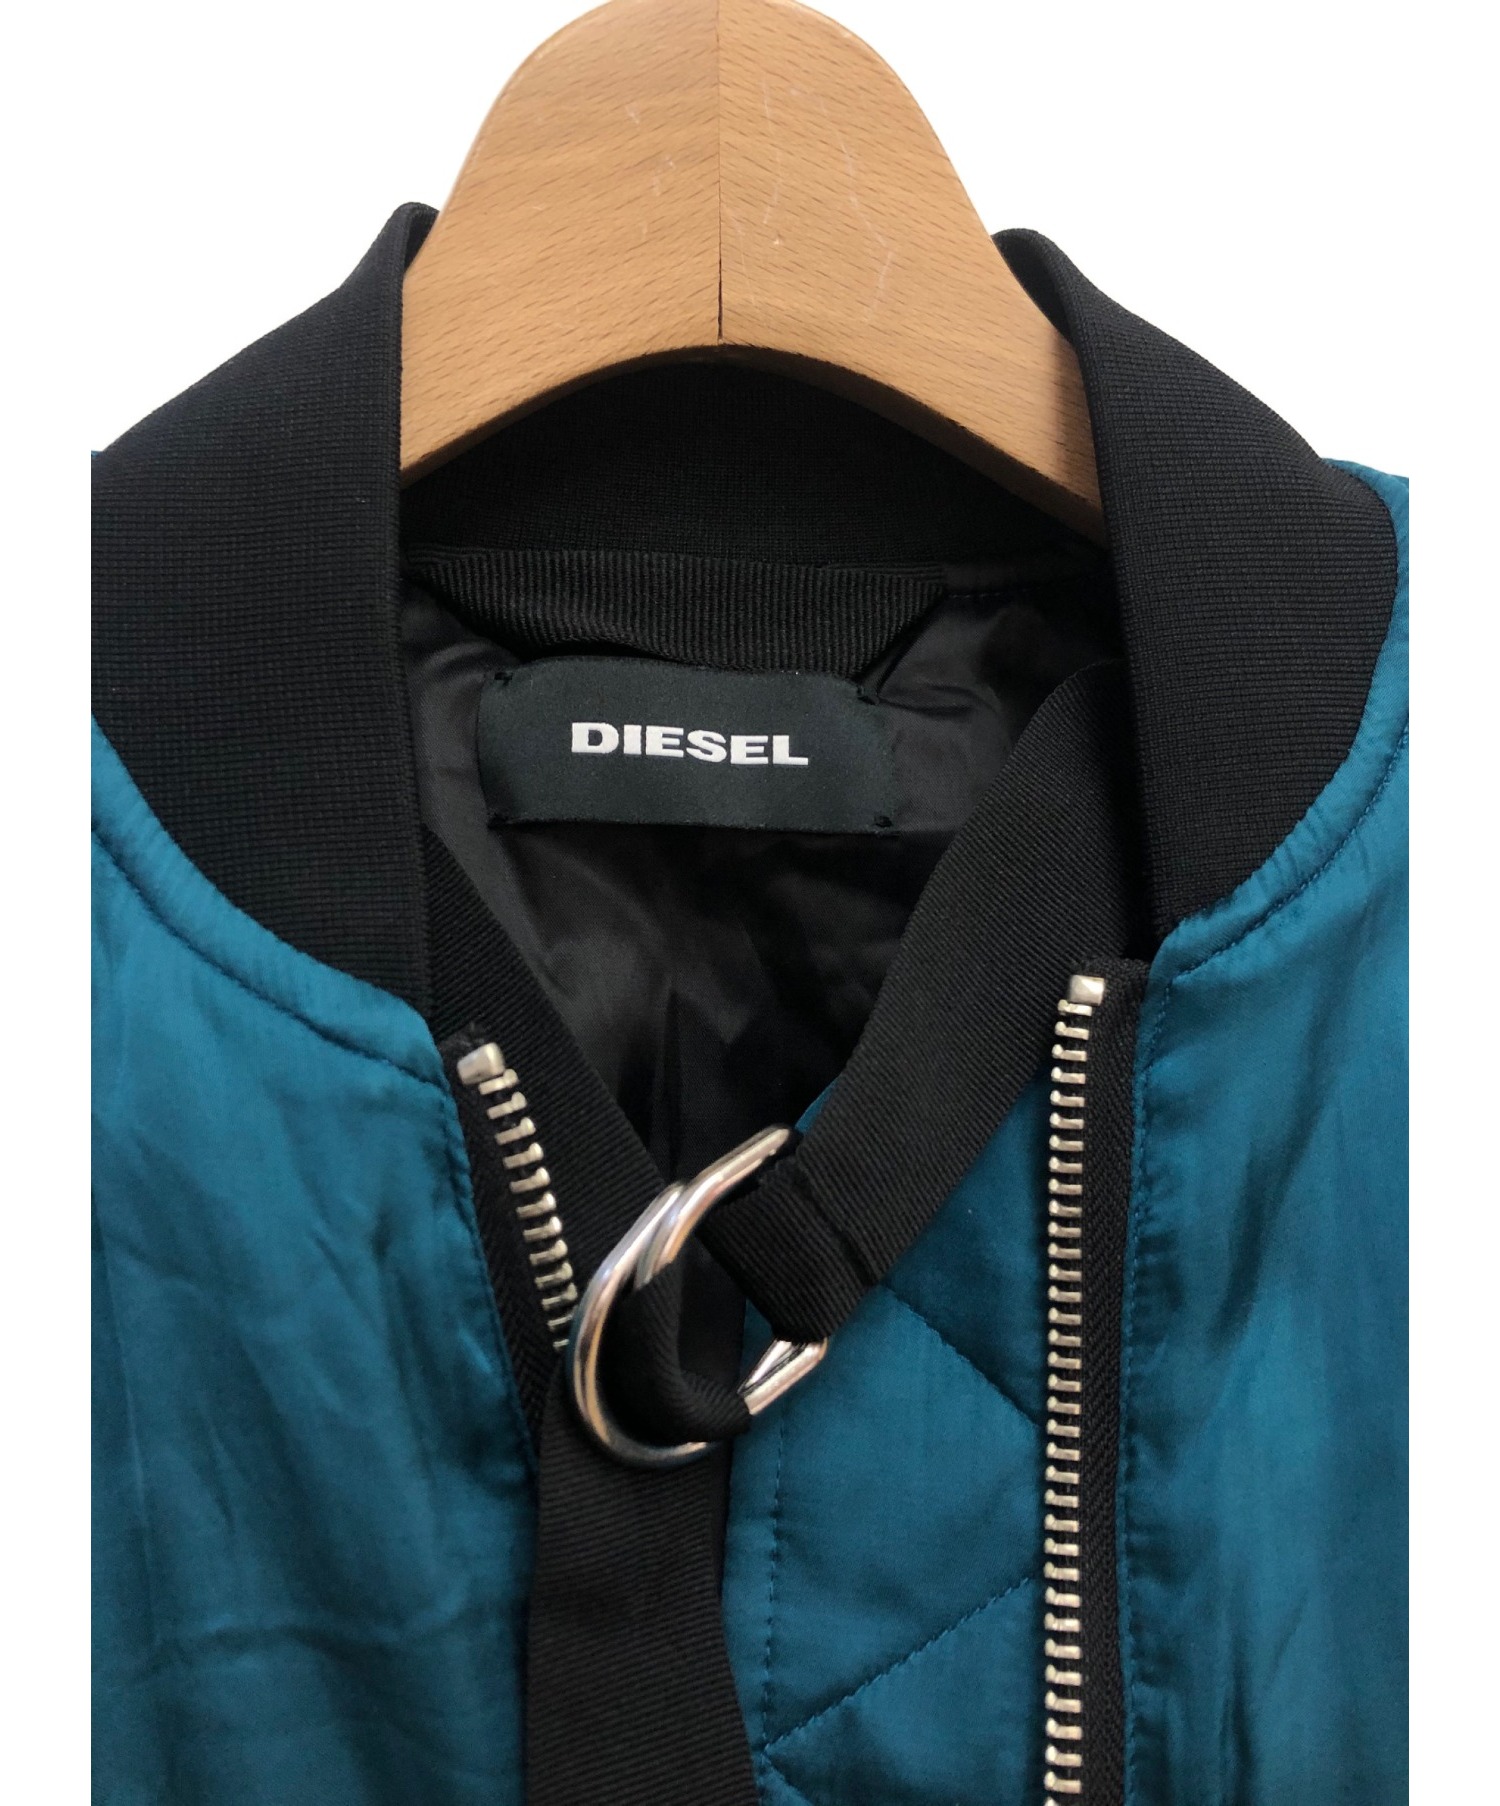 DIESEL (ディーゼル) 19AW ボンバージャケット ブルーグリーン サイズ:XS